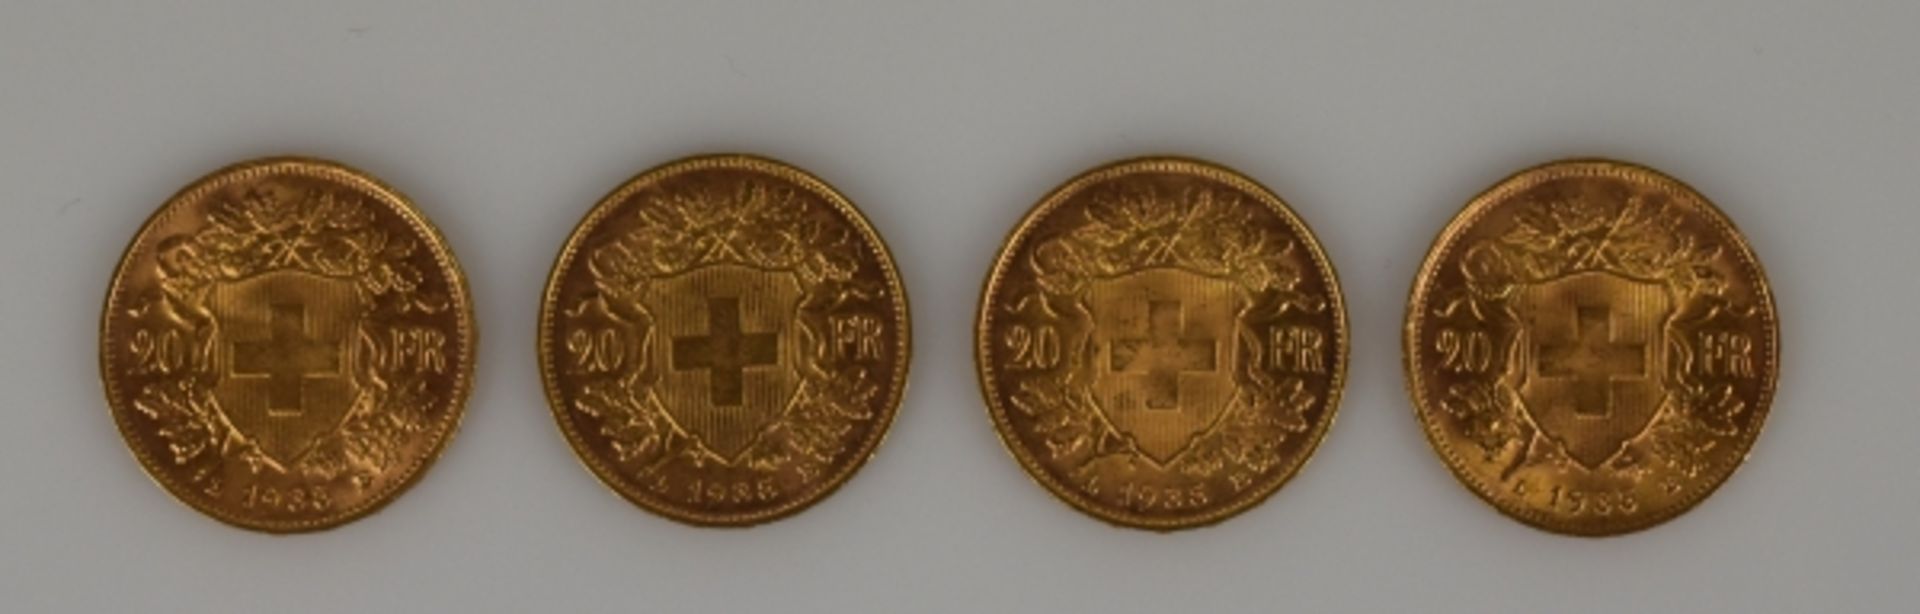 4 GOLDMÜNZEN 20 Fr. (Vreneli) Schweiz 1935 (4x), 25,8g